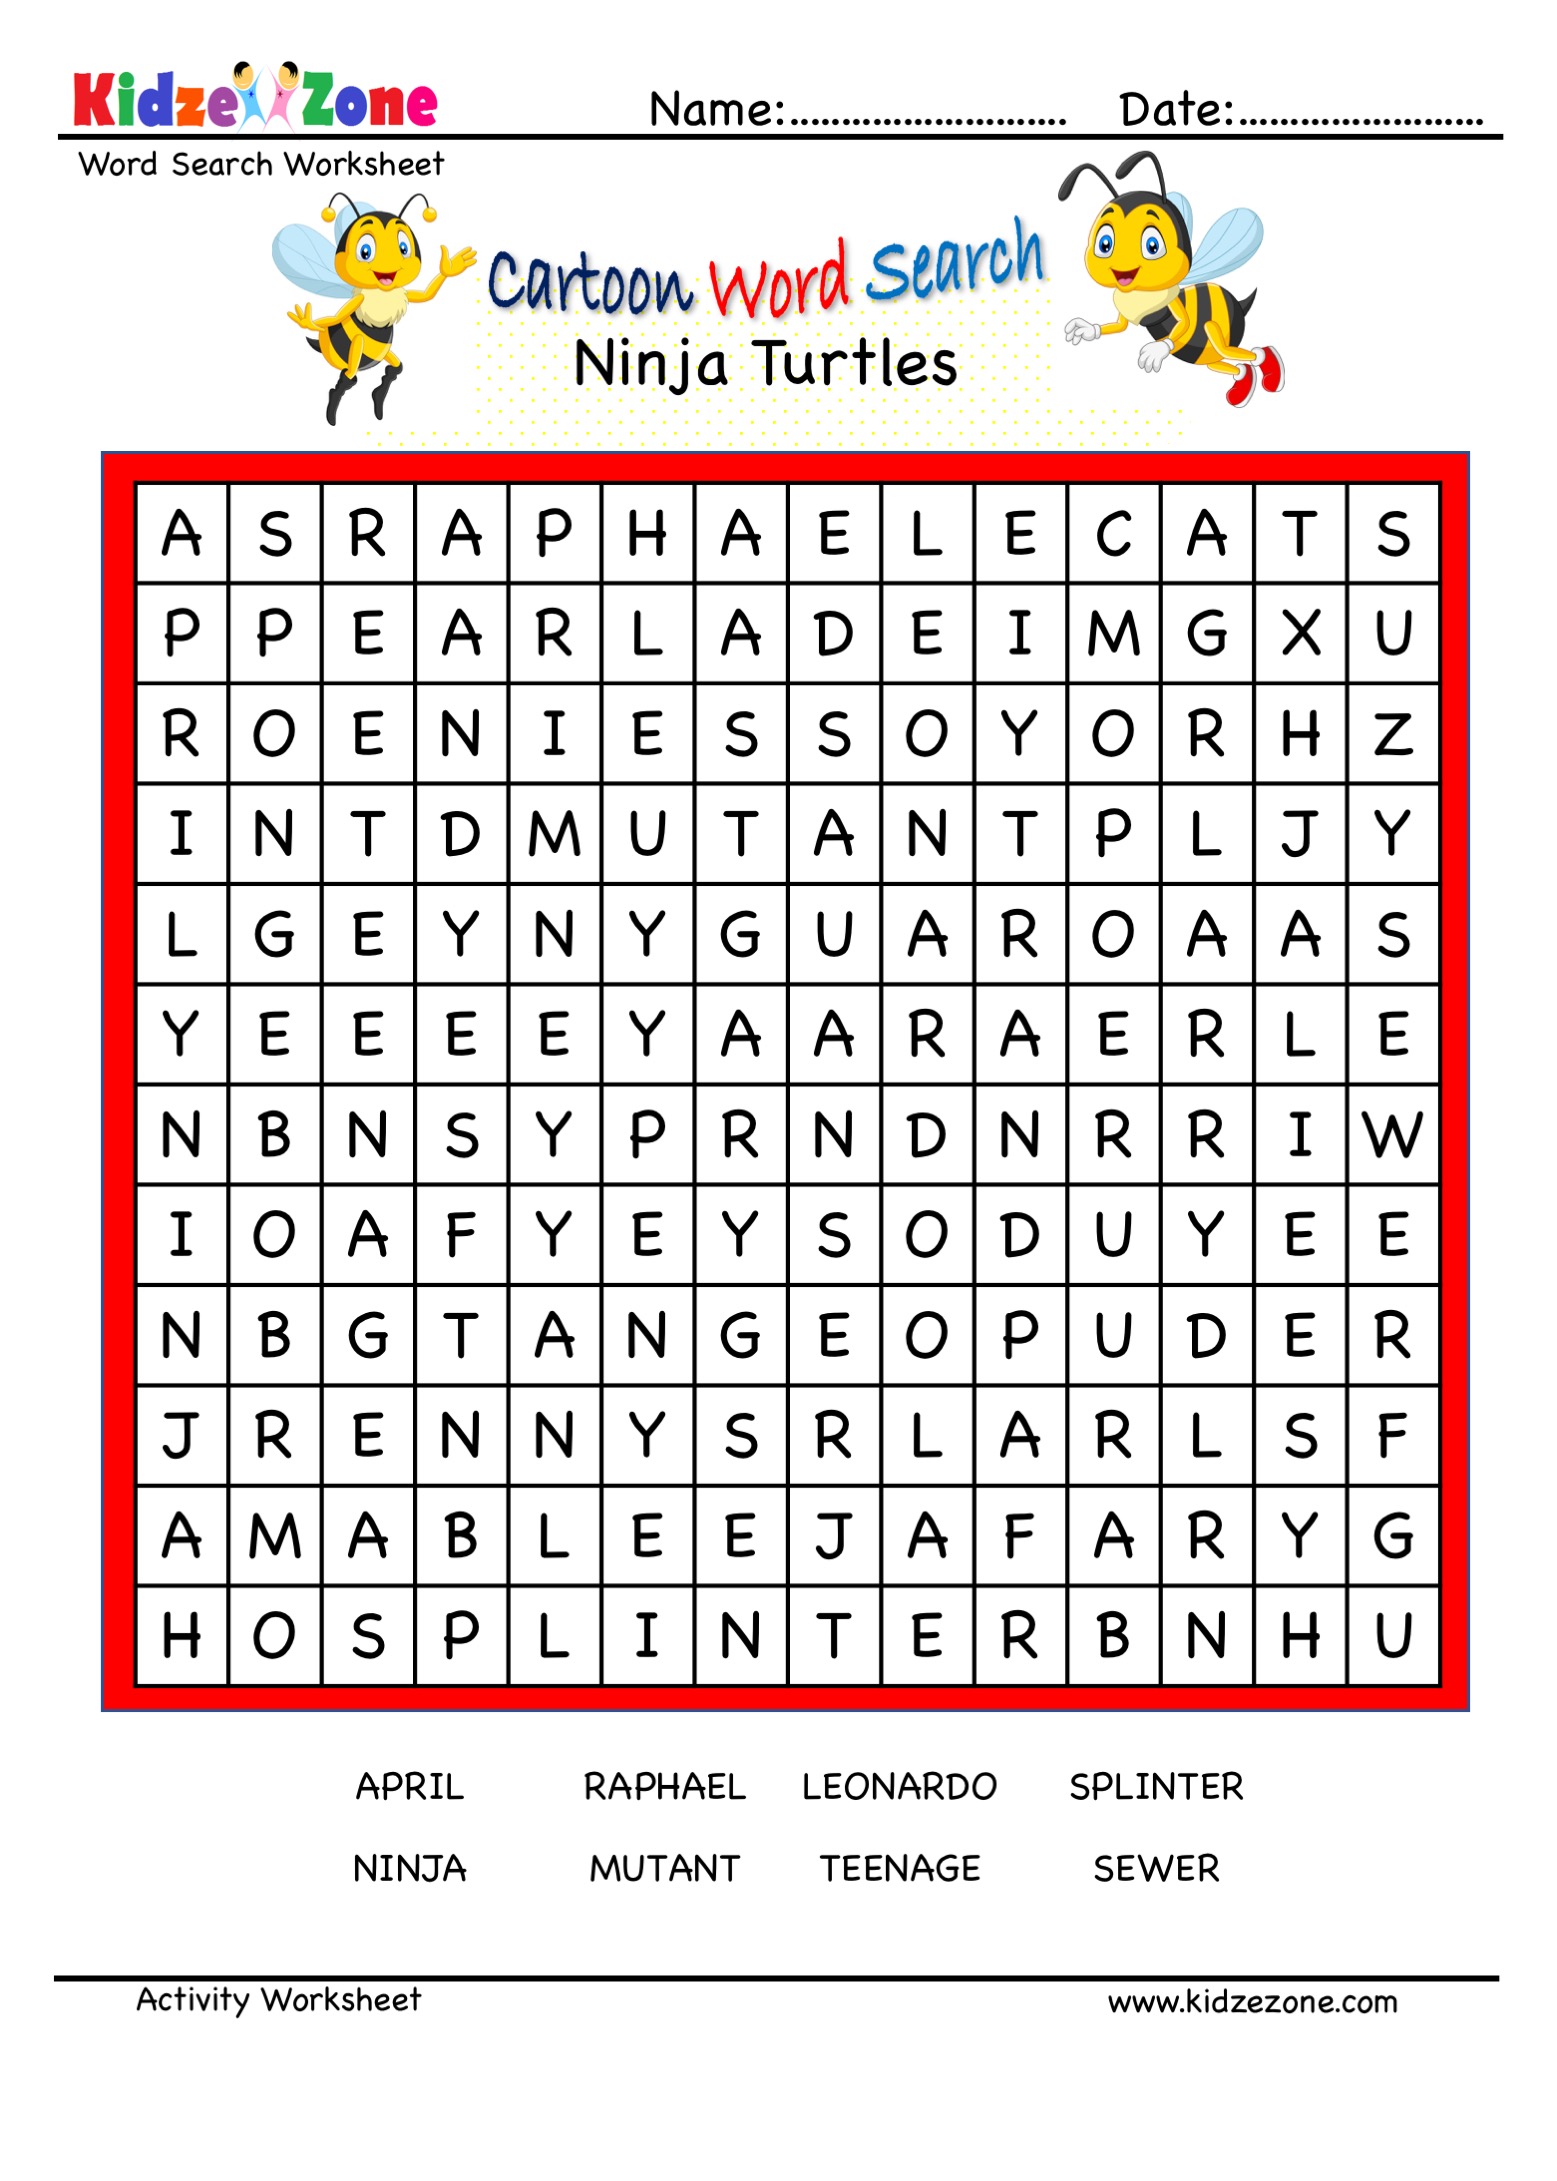 ninja-turtles-word-search-puzzle-kidzezone